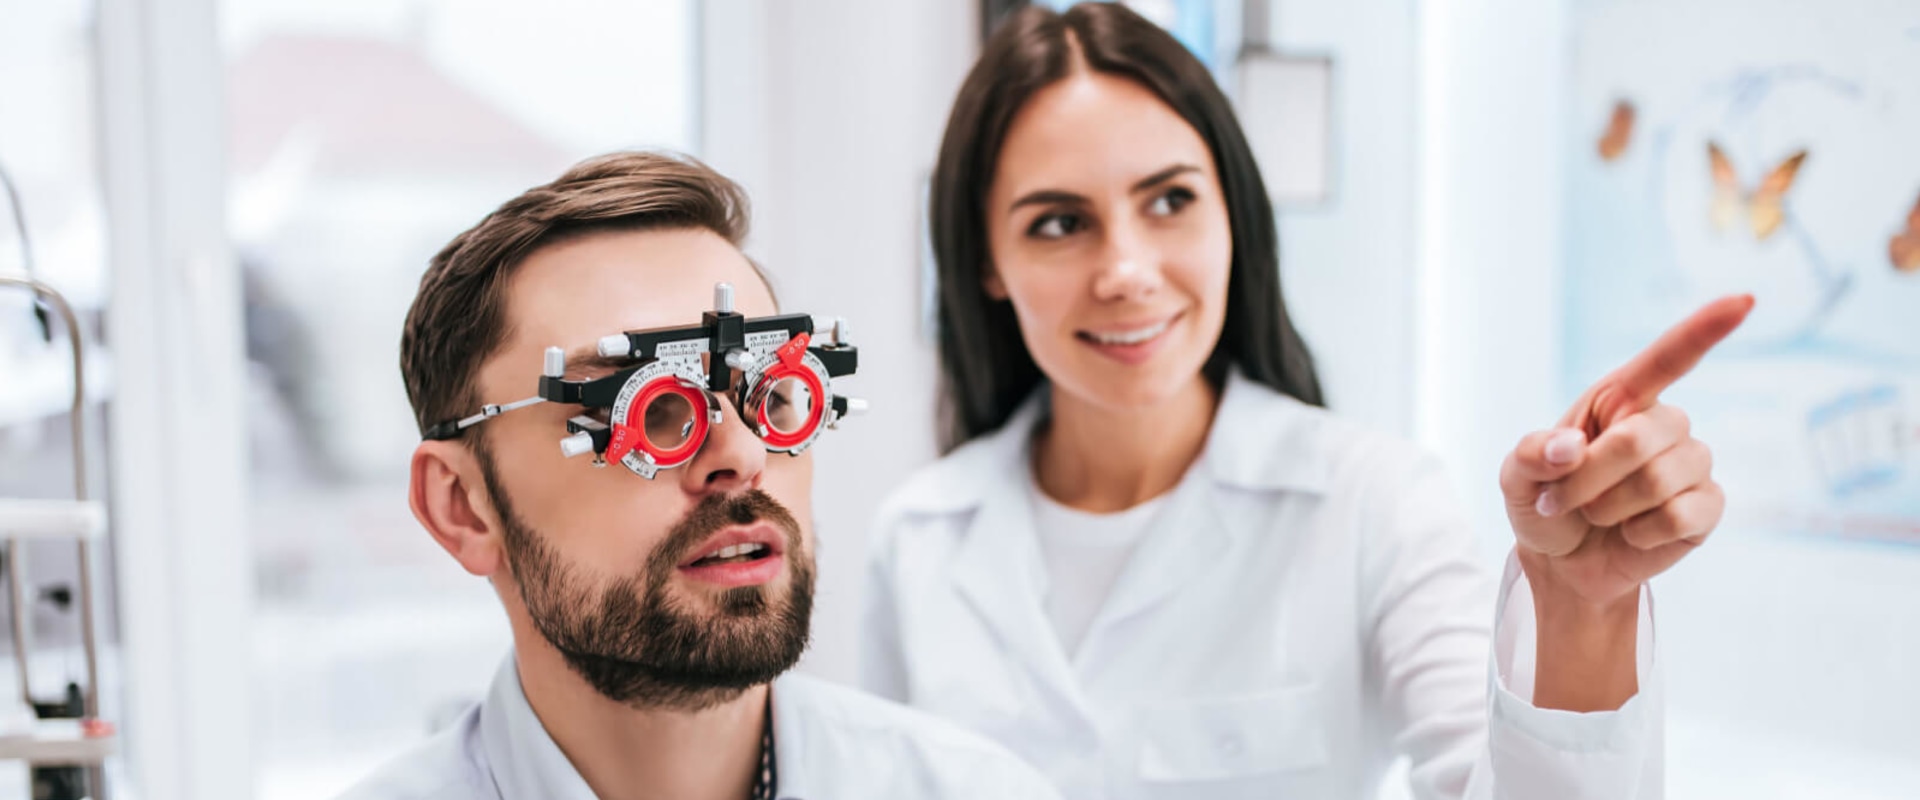 How Often Should You Get an Eye Exam?